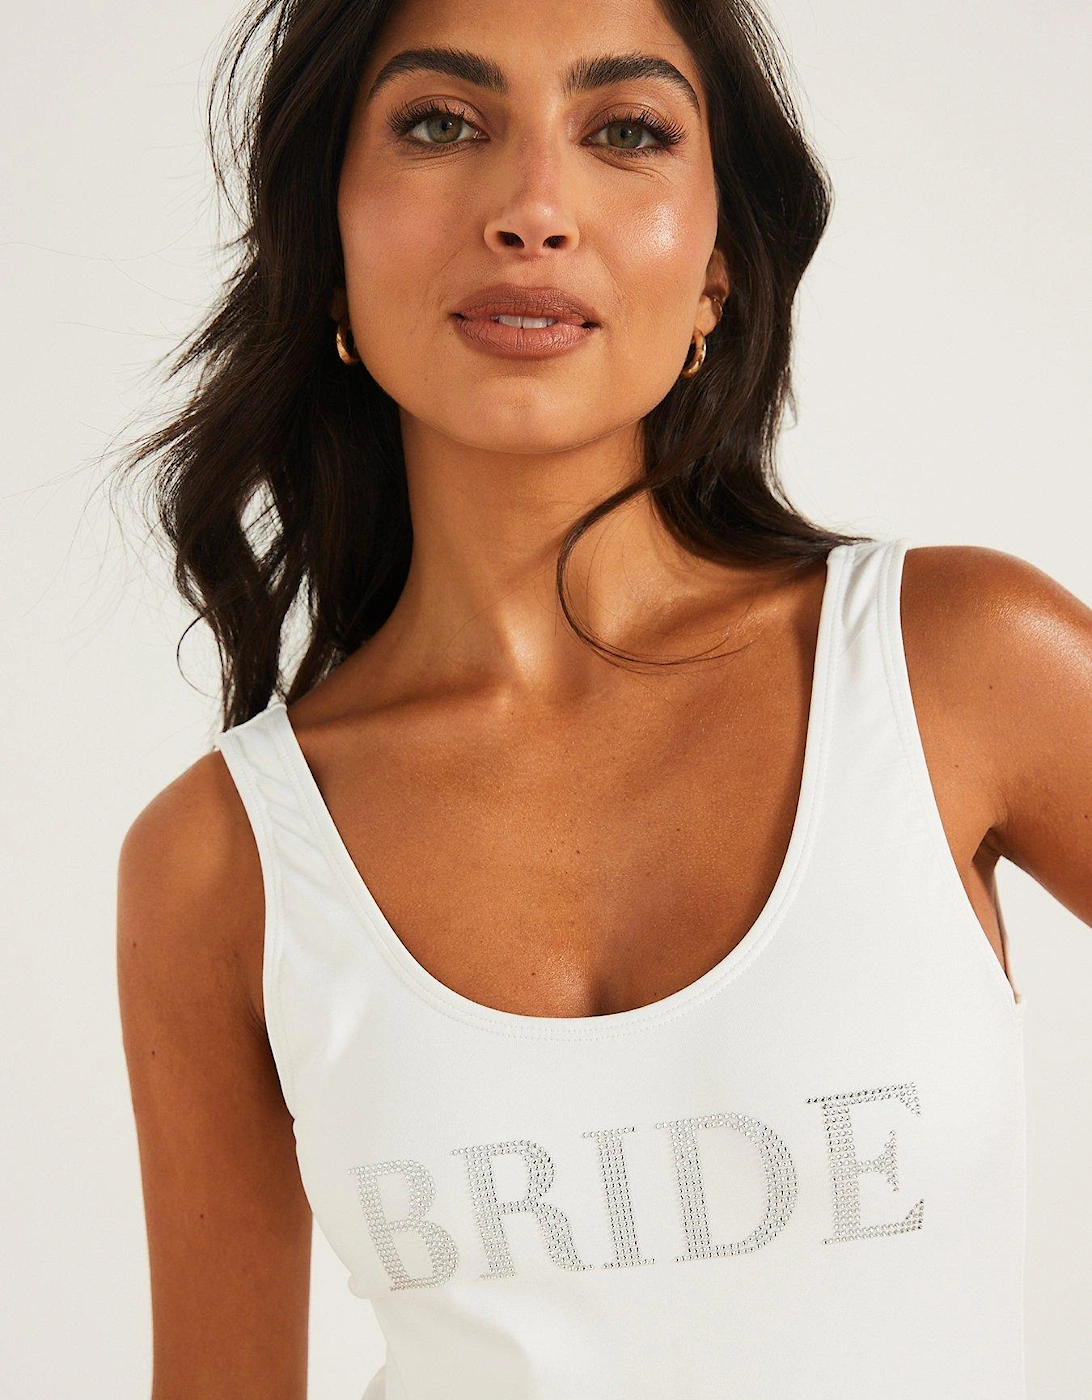 Bride Rhinestone Swimsuit - White